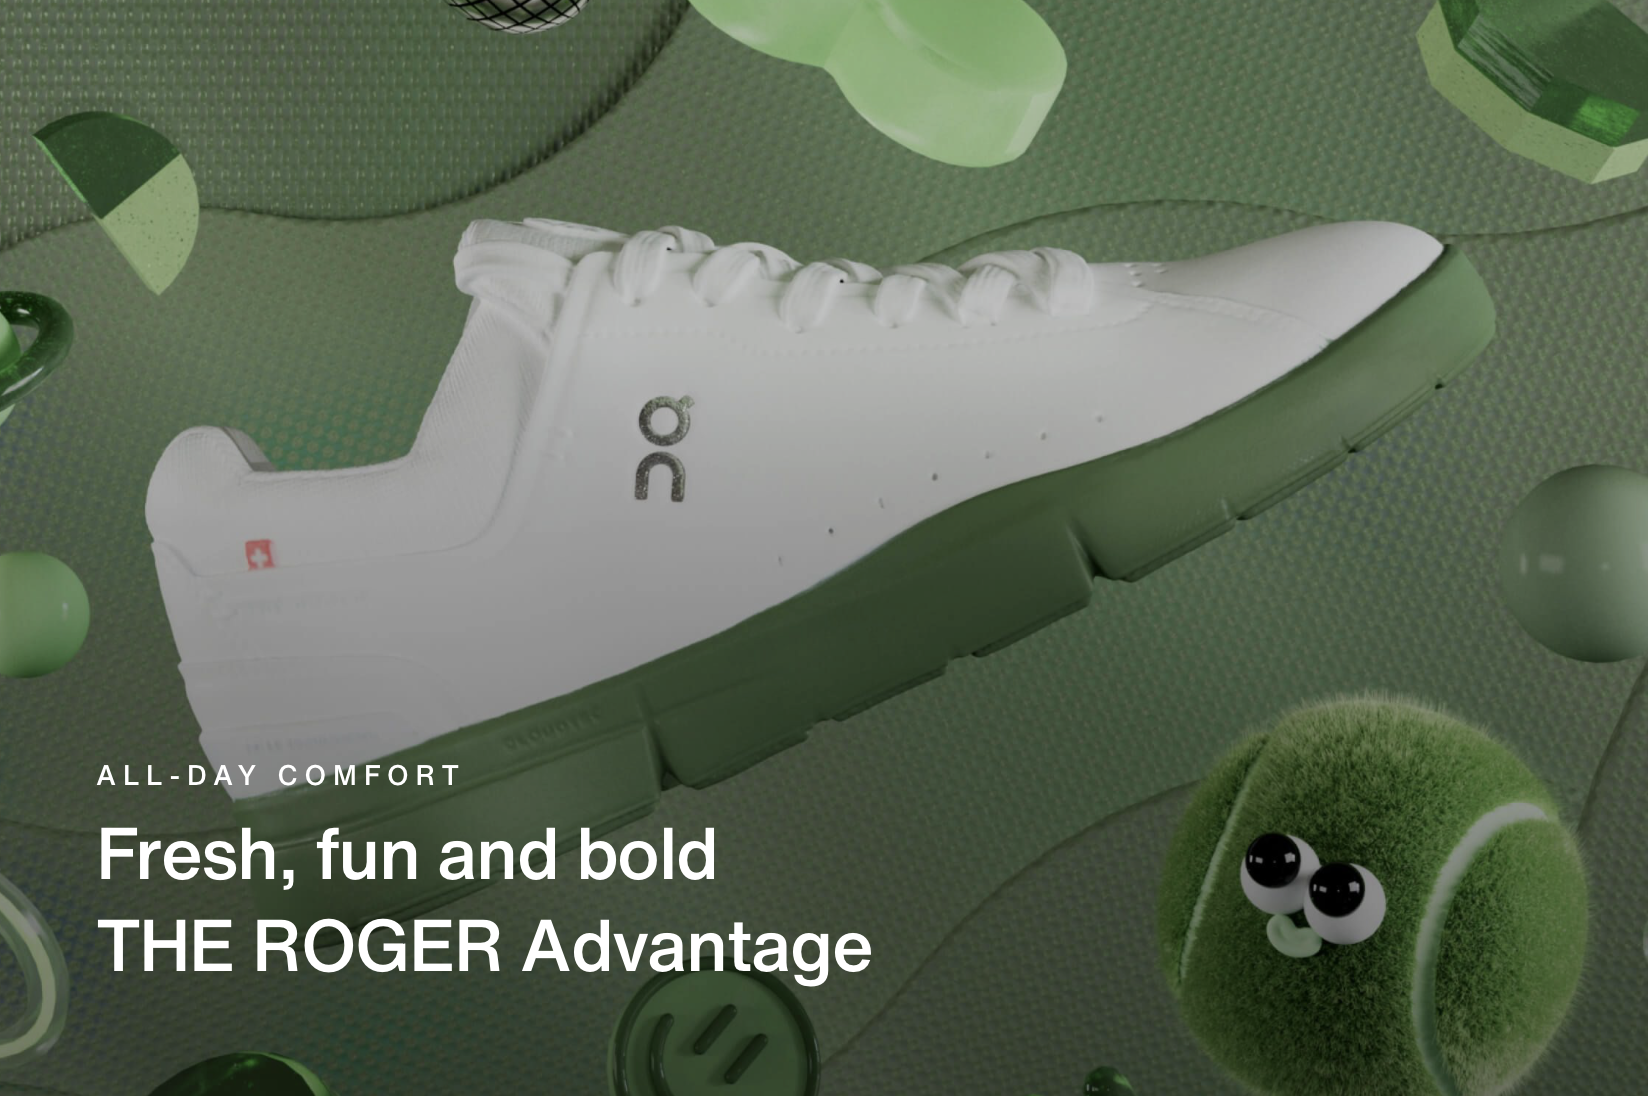 Roger Federer-backed Shoe Subscription Service Offers High-Performance Vegan Running Shoes